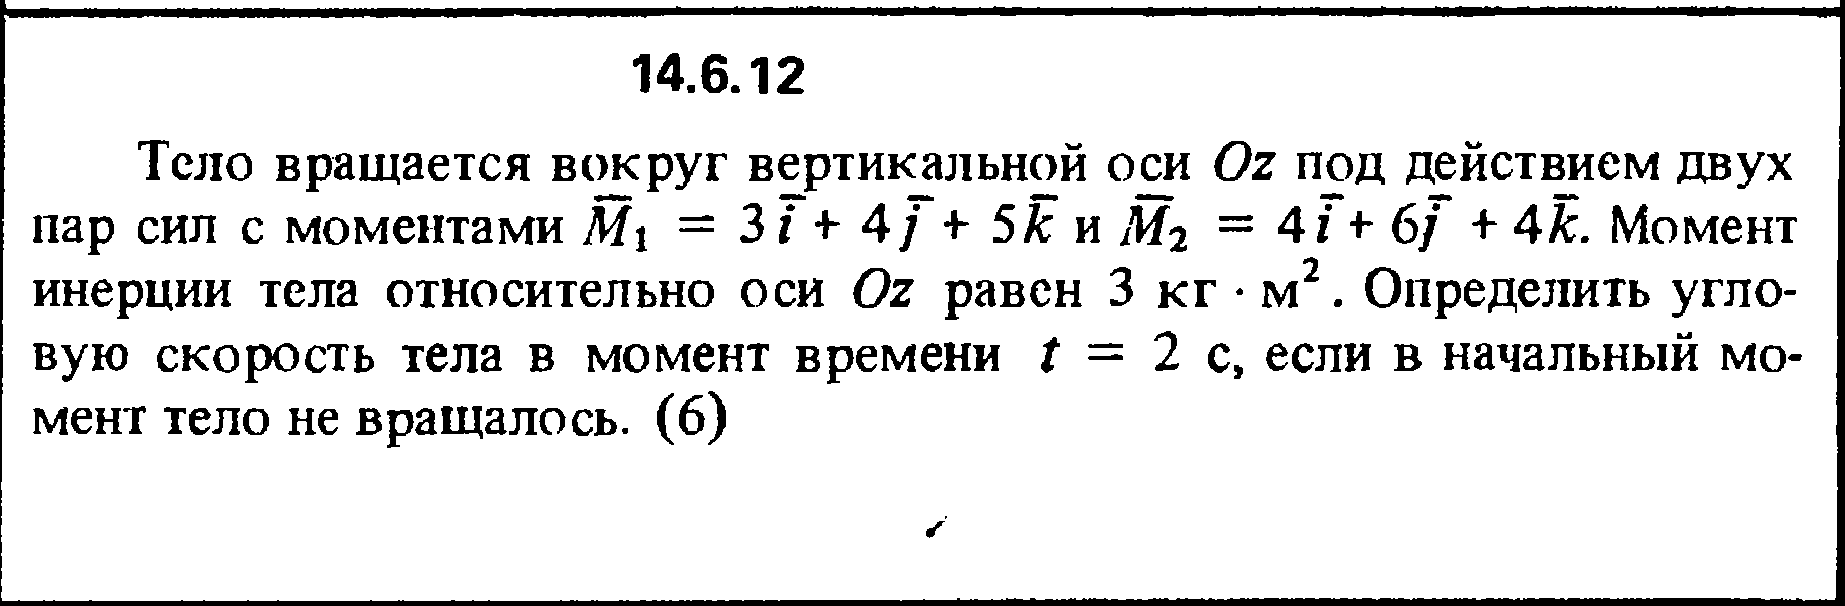 Решение задачи 14.6.12 из сборника Кепе О.Е. 1989 года